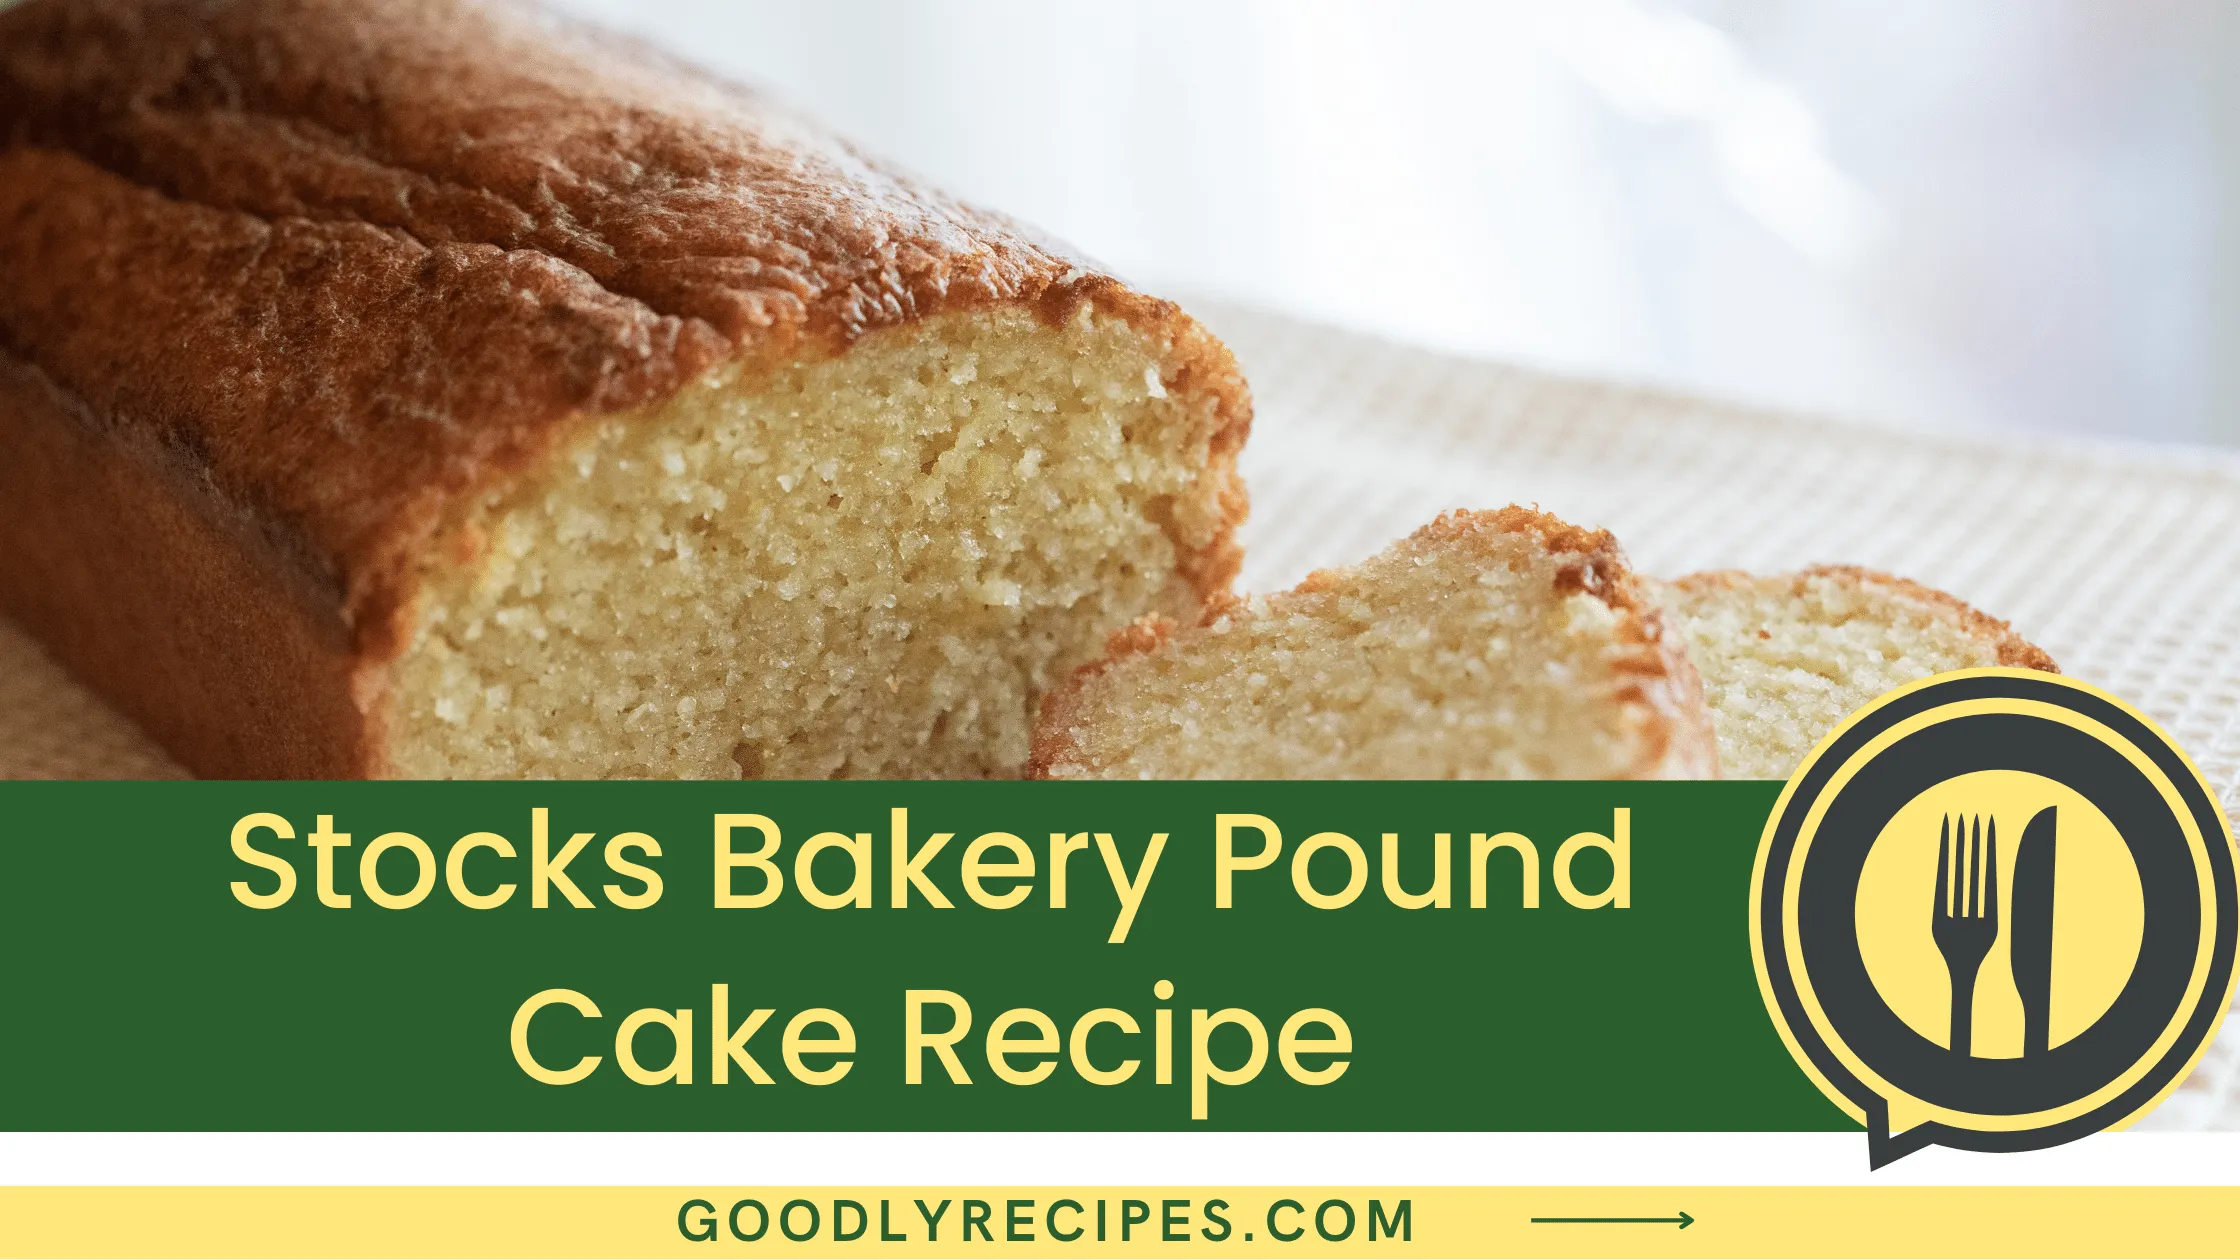 Stocks Bakery Pound Cake Recipe